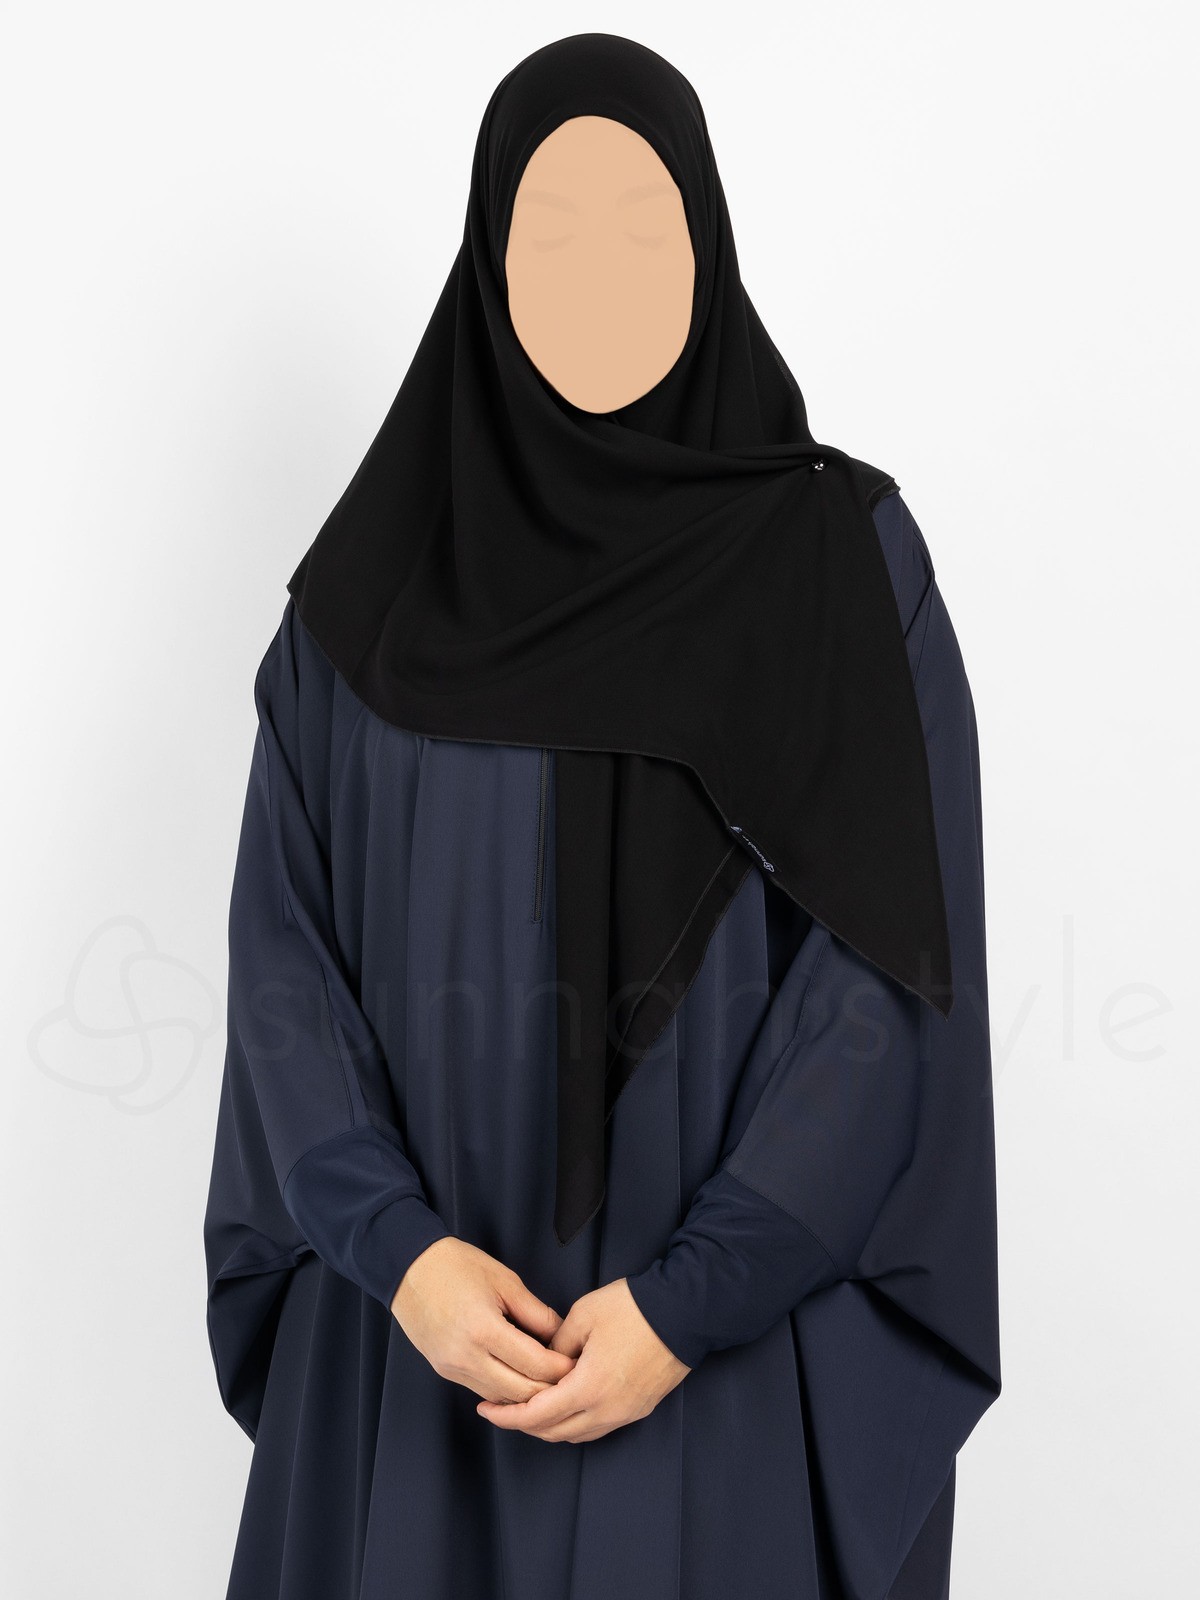 Sunnah Style - Essentials Square Hijab - Standard (Black)